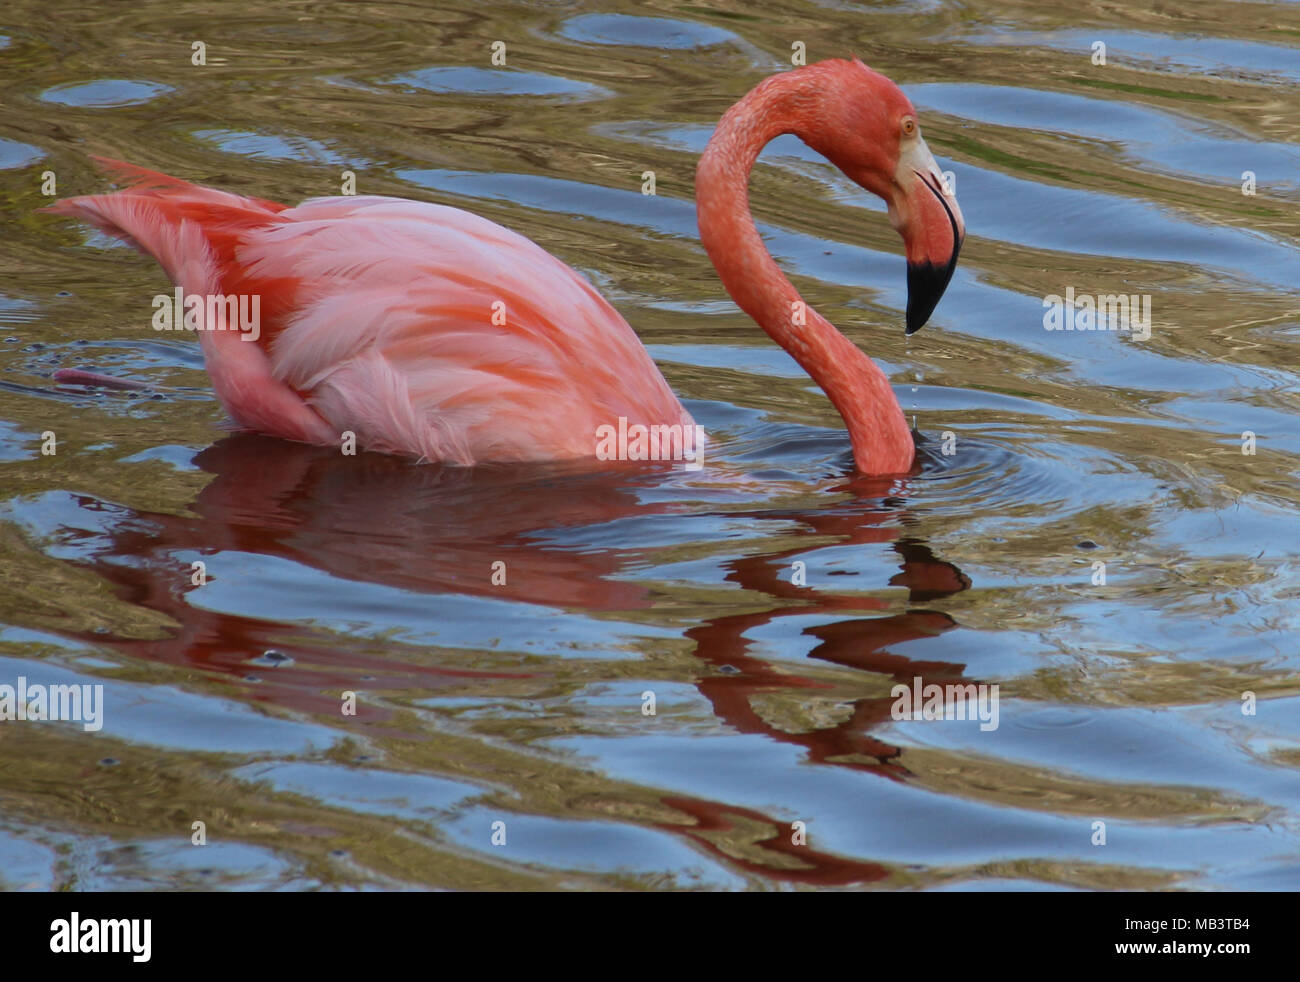 Jolie flaming flamingo Banque D'Images